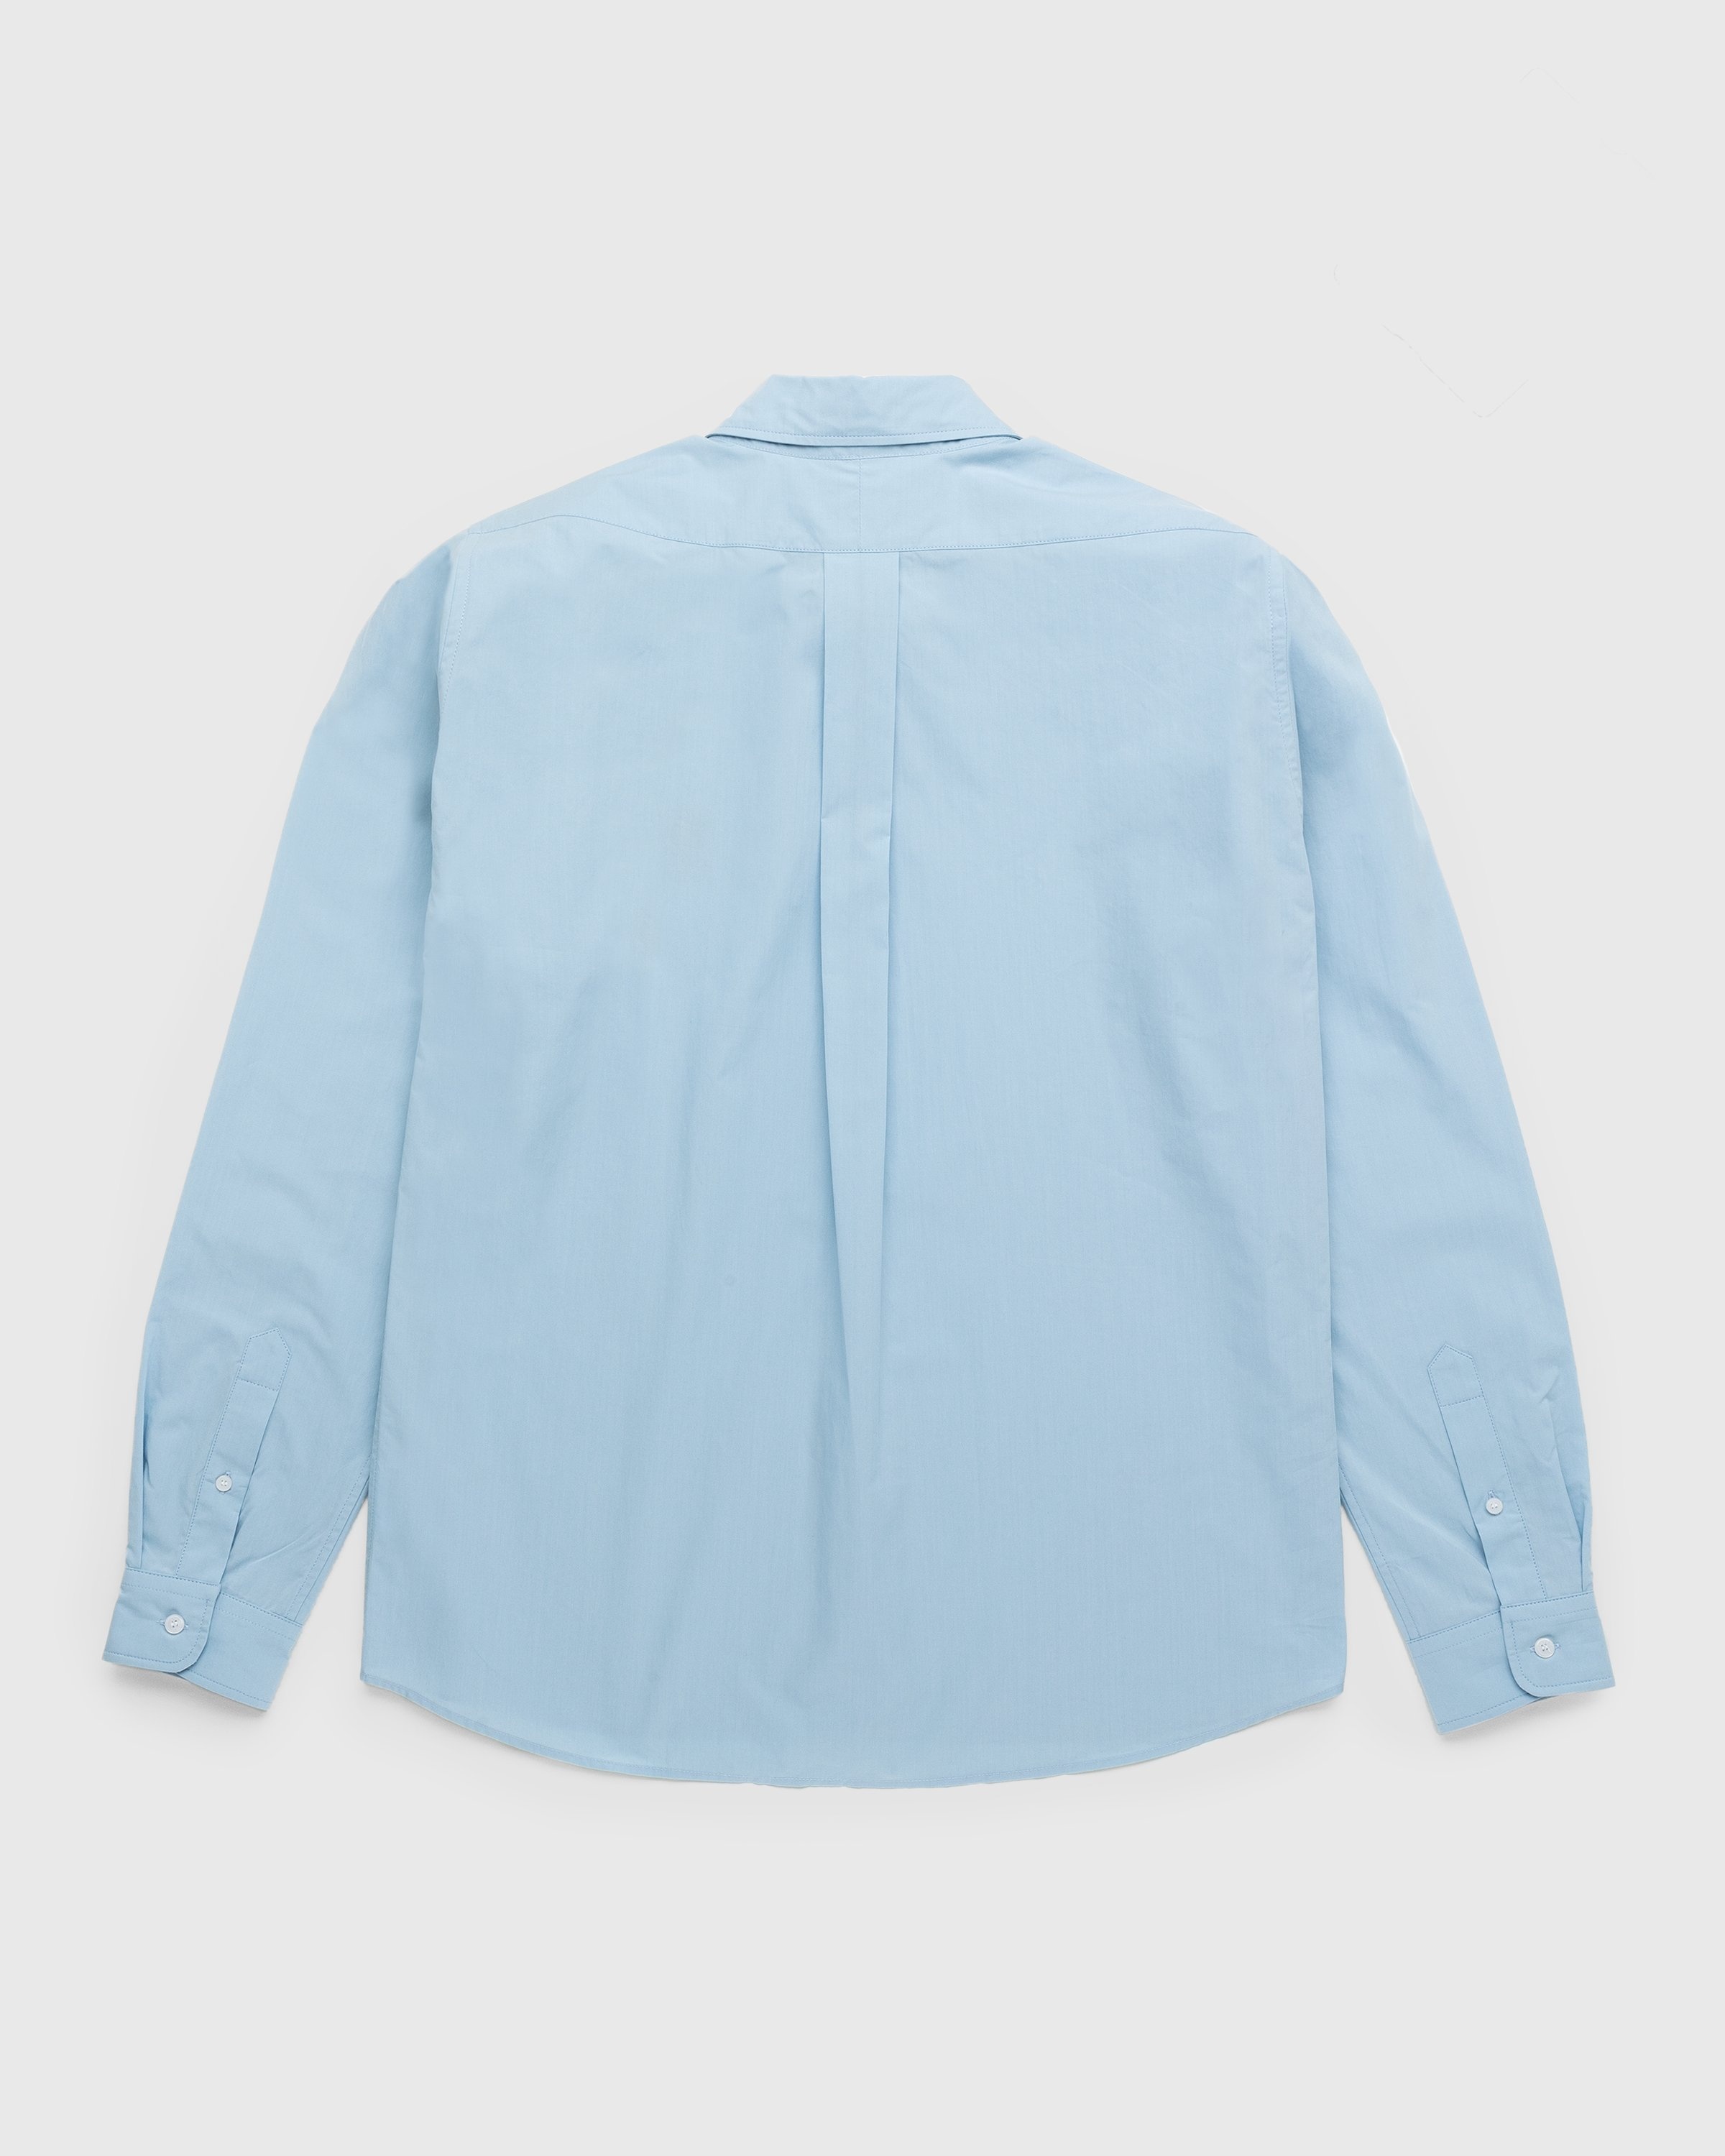 Kenzo – Shirt Sky Blue - Shirts - Blue - Image 2